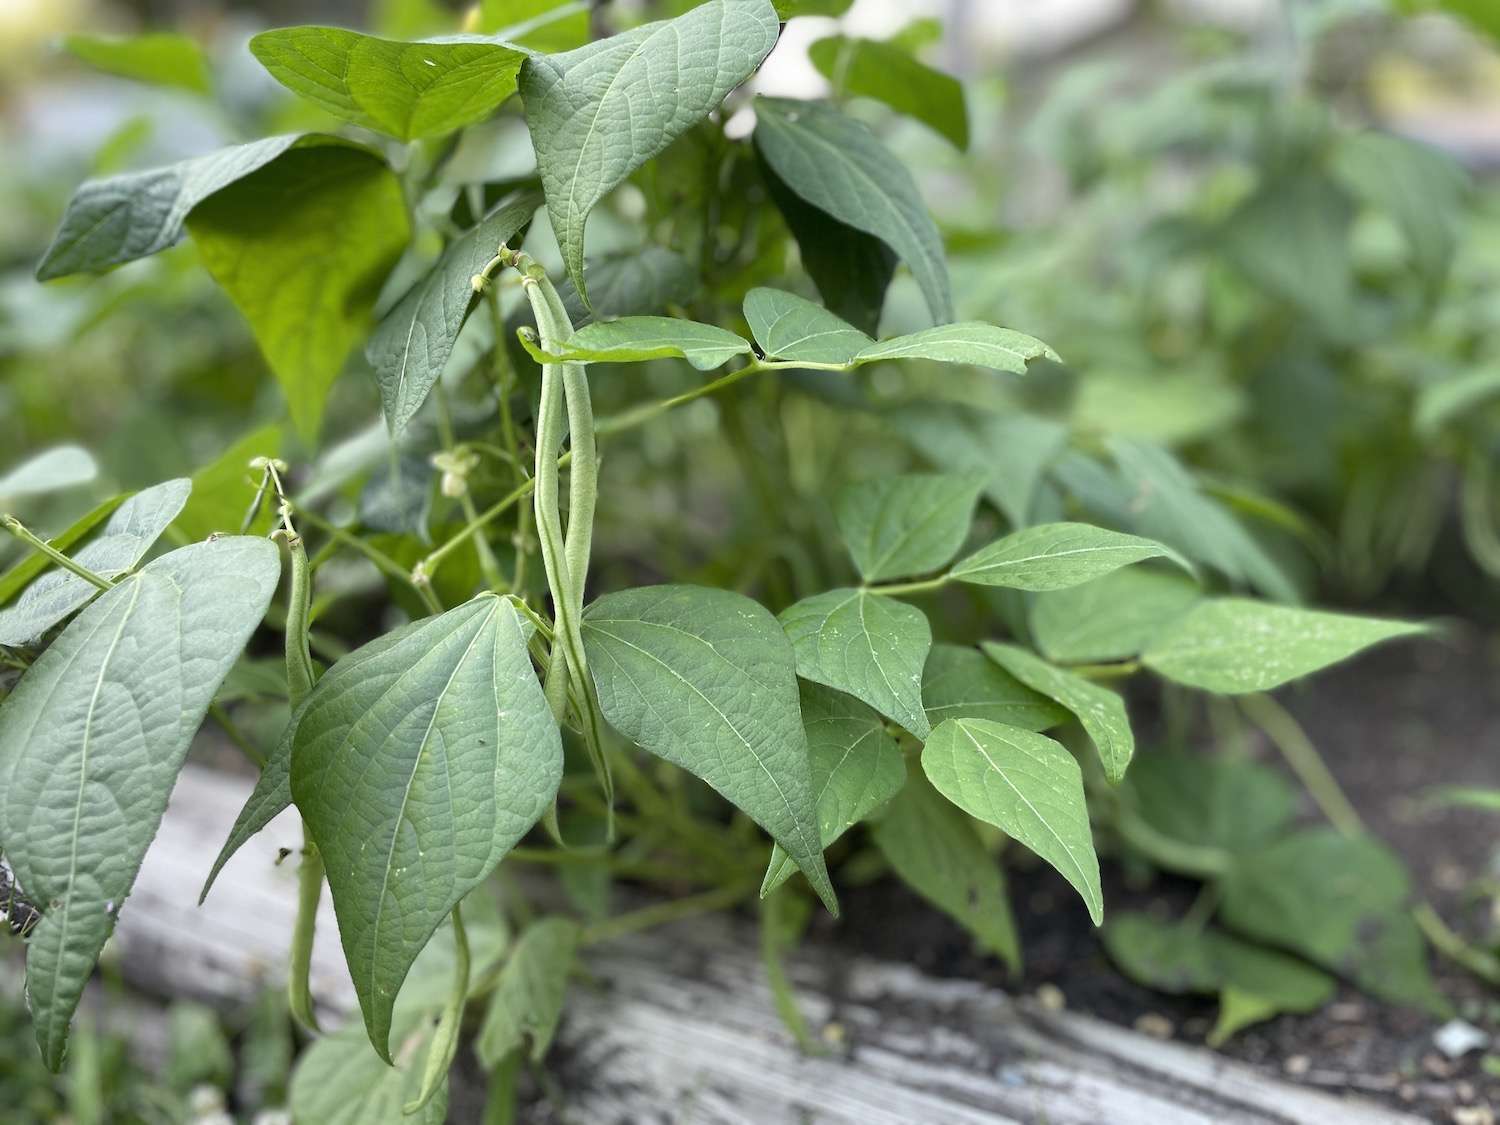 A close up photo of a bush bean plant